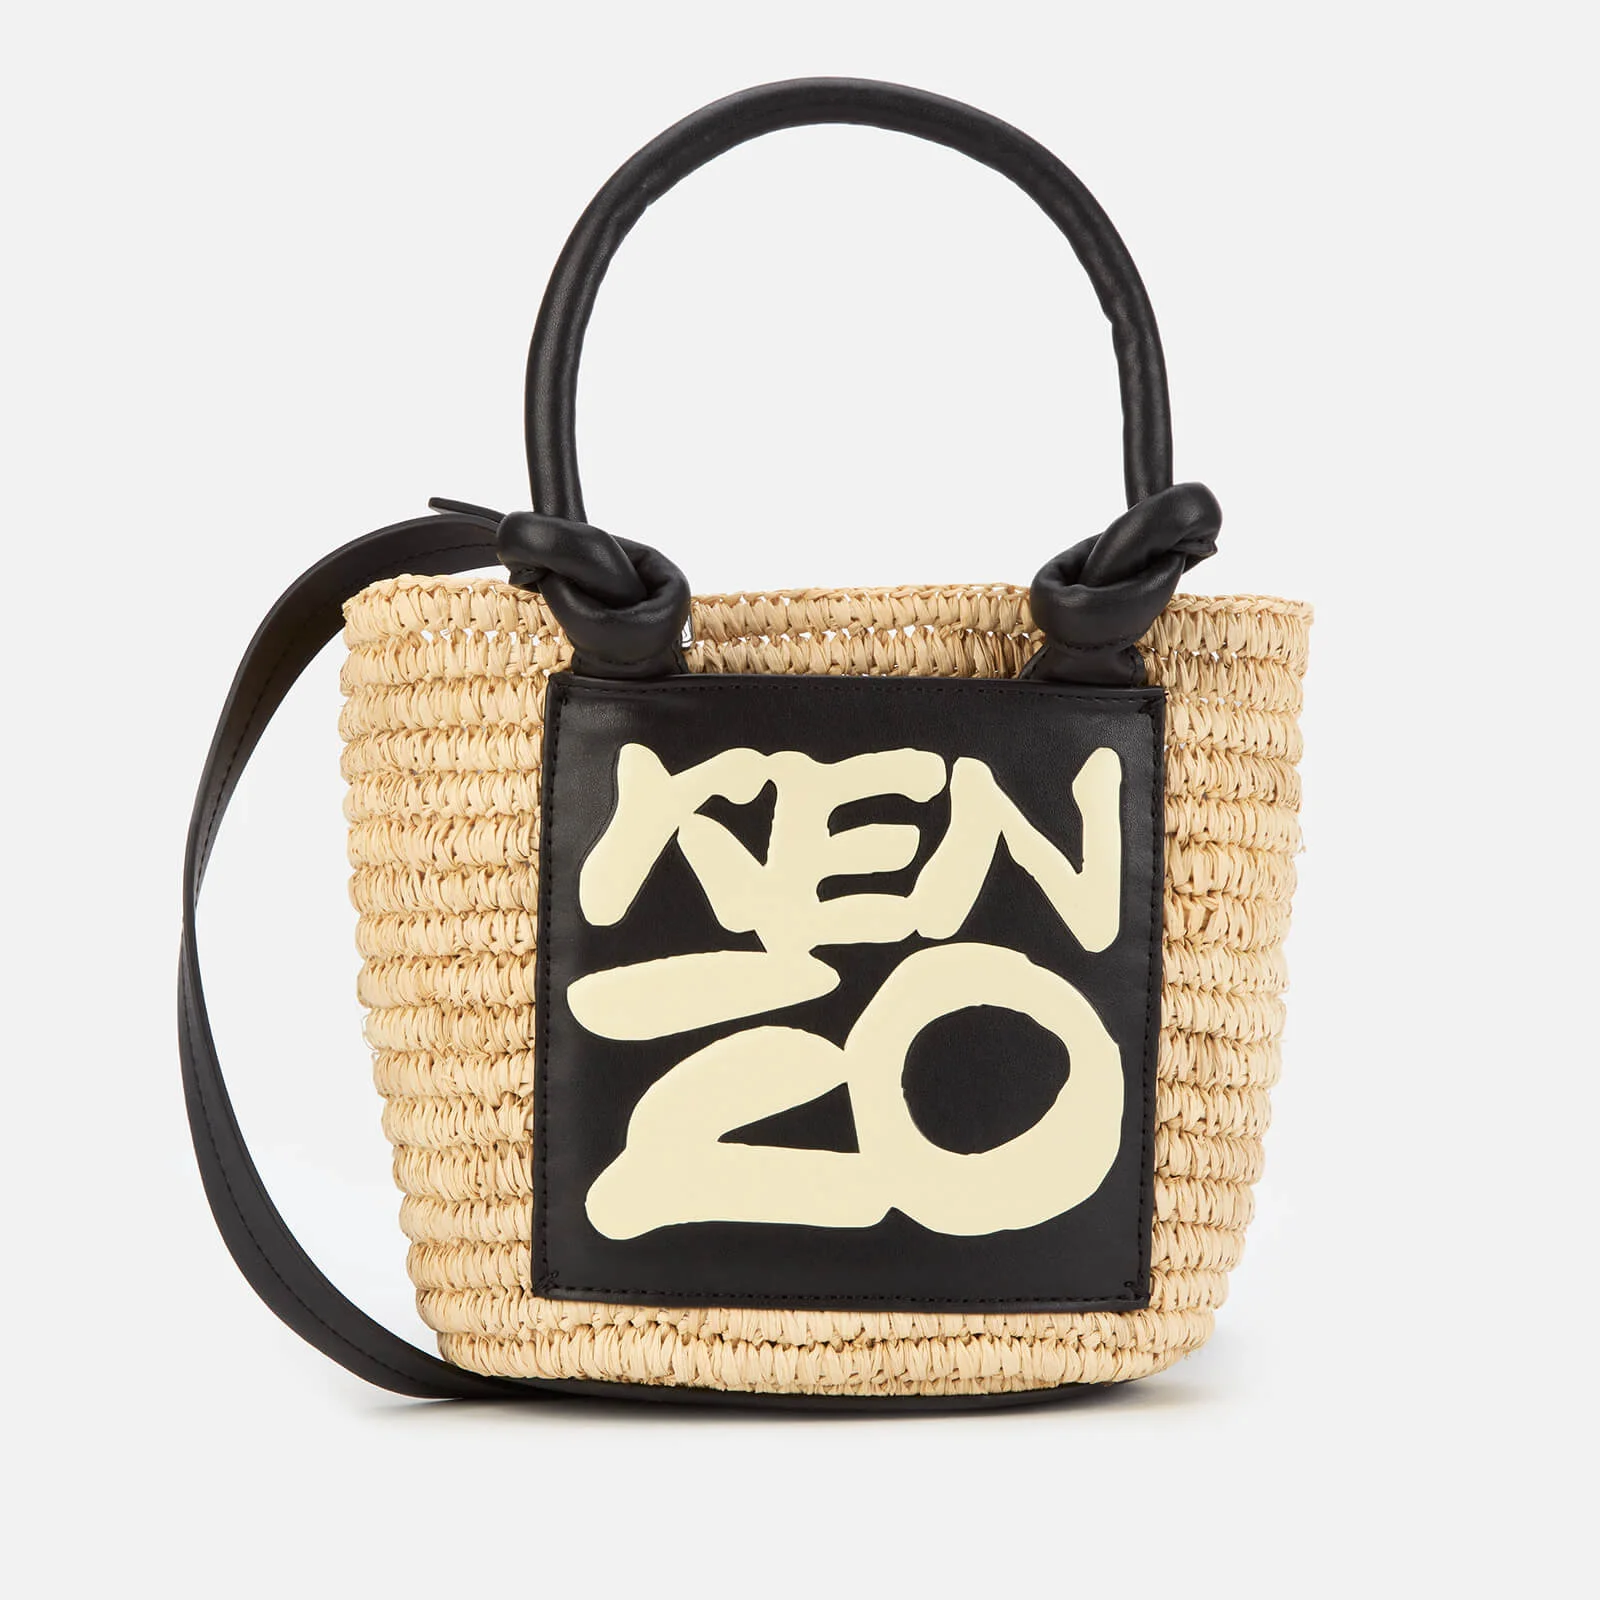 KENZO Women's Mini Basket Bag - Beige Image 1